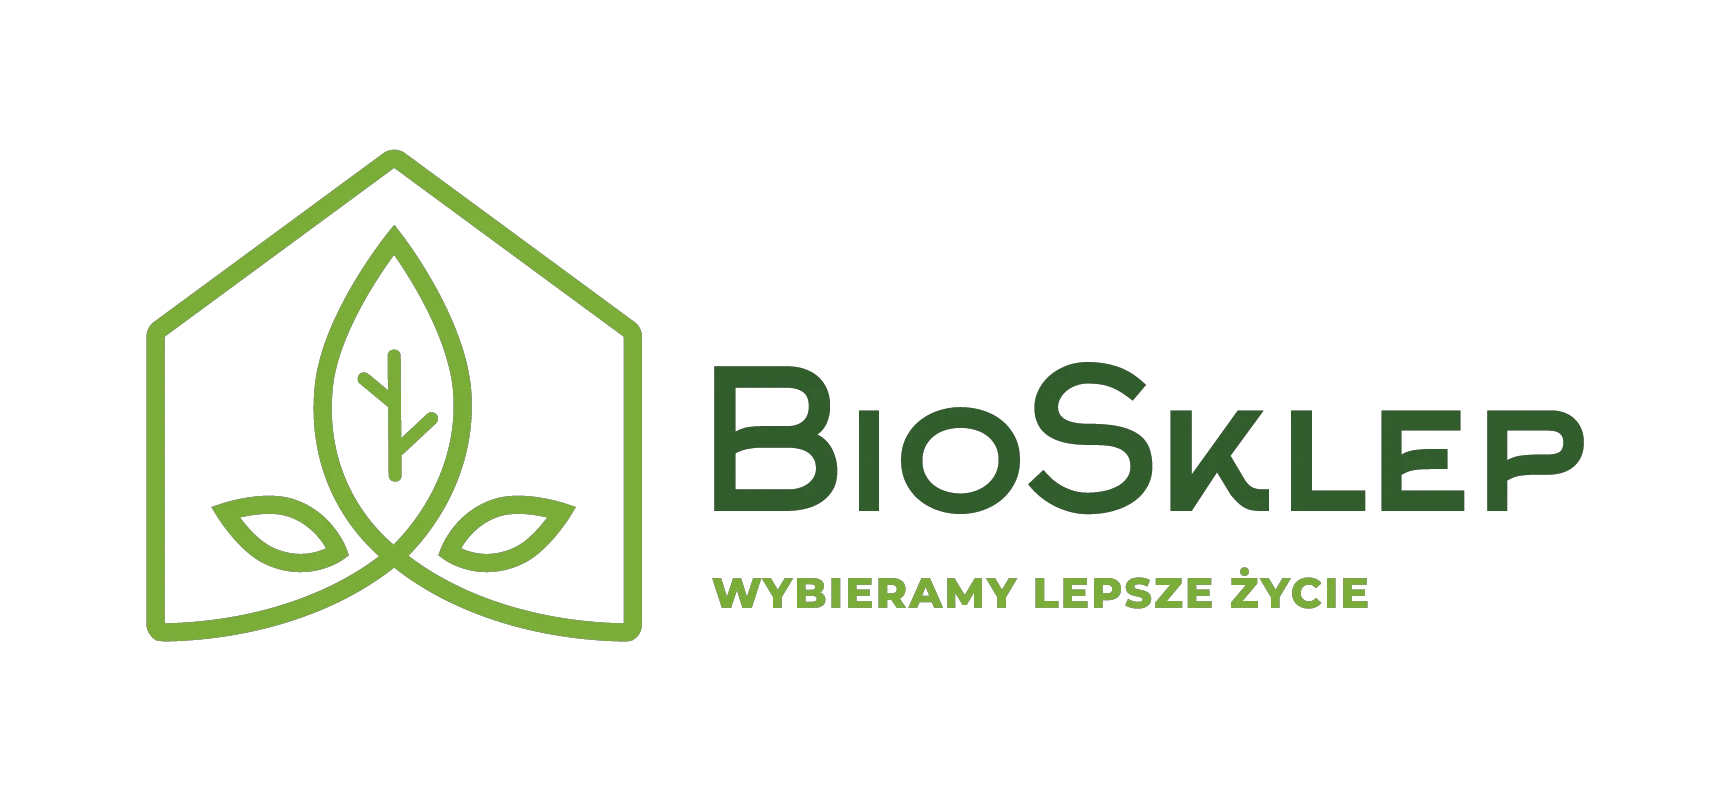 biosklep.com.pl